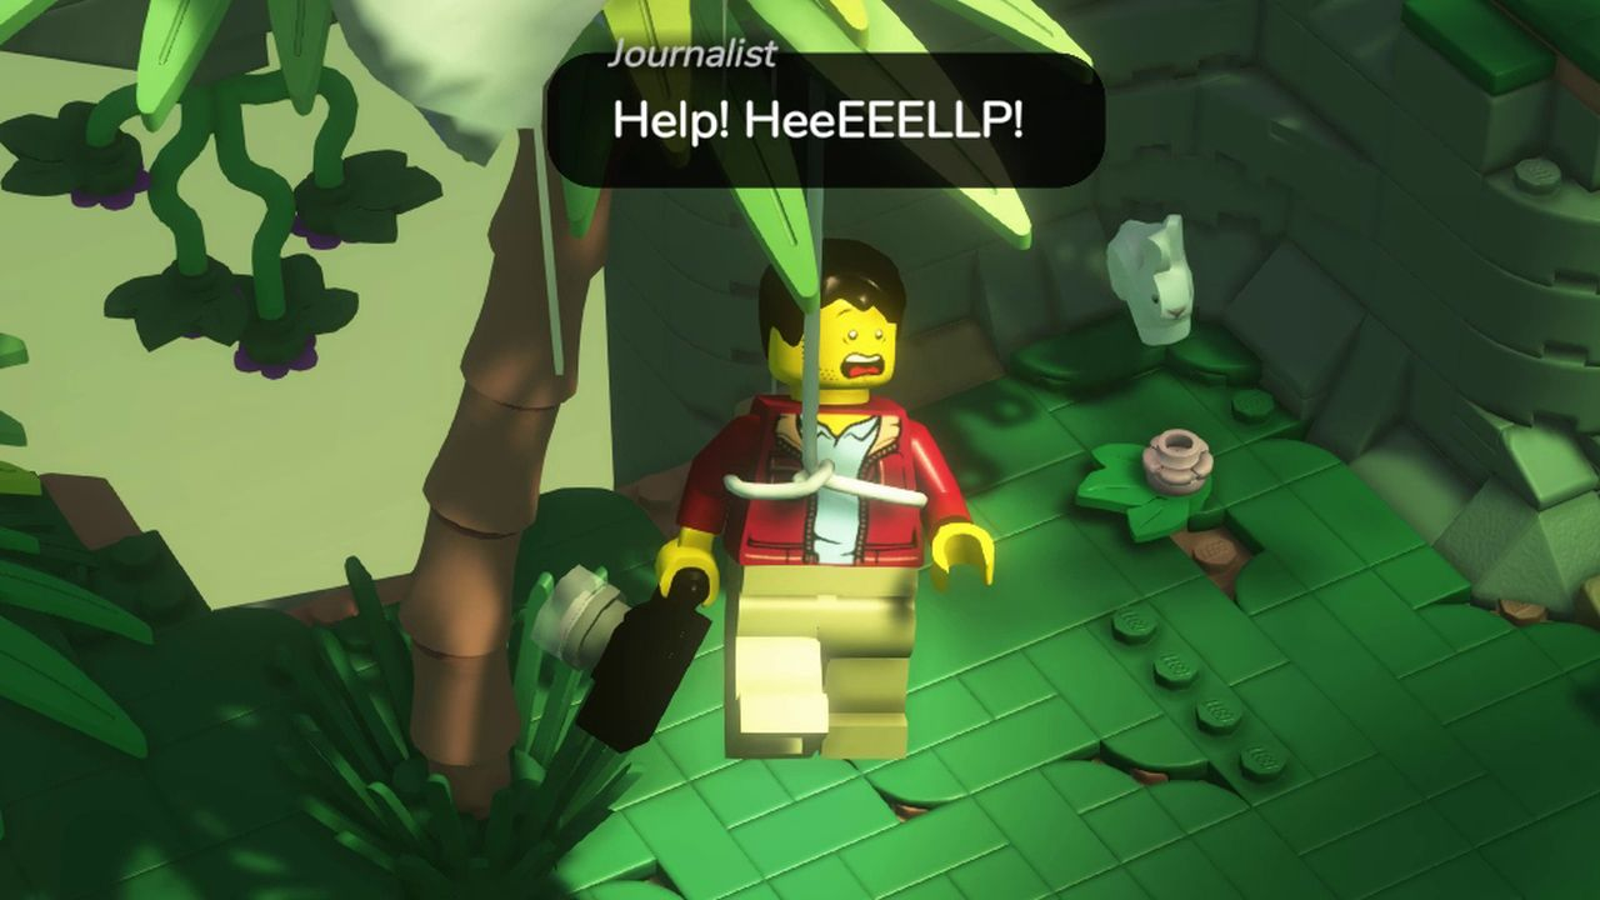 The Lego Ninjago trailer hints at another block-filled blockbuster